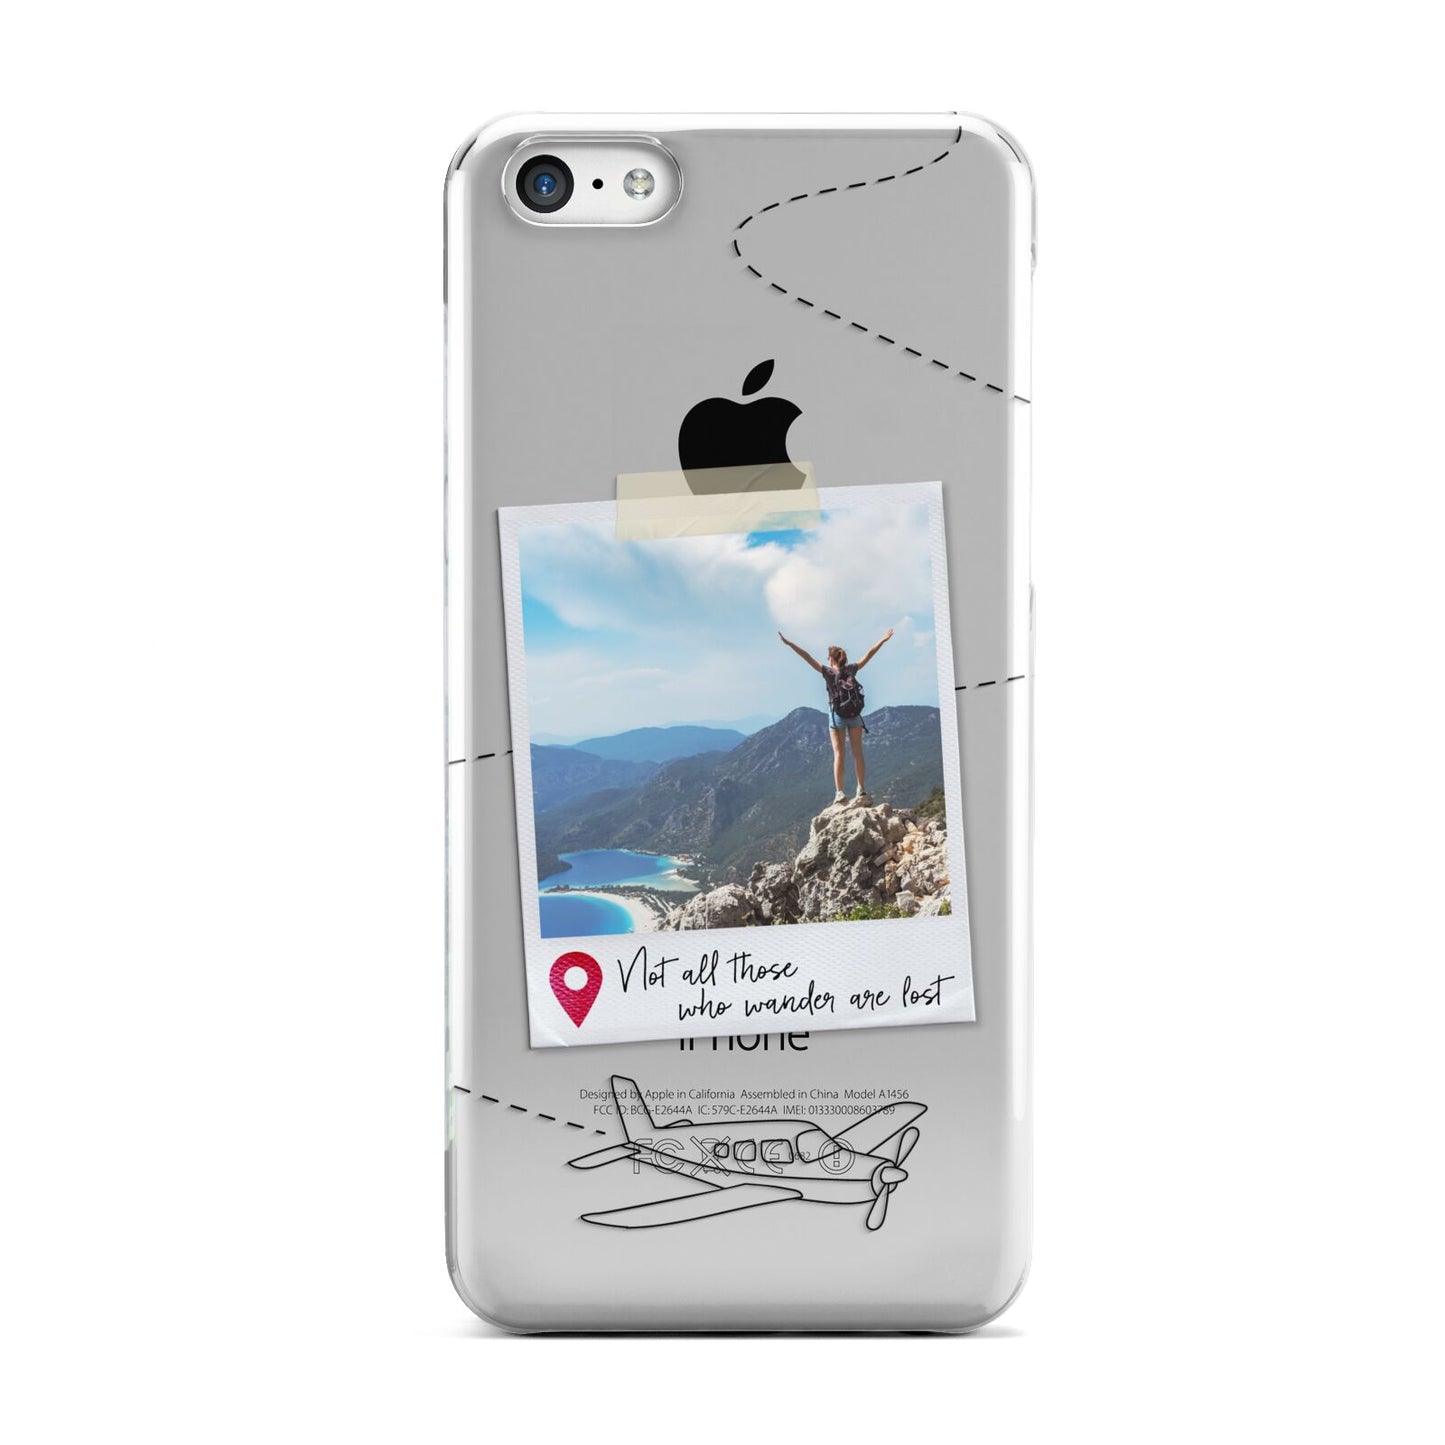 Backpacker Photo Upload Personalised Apple iPhone 5c Case